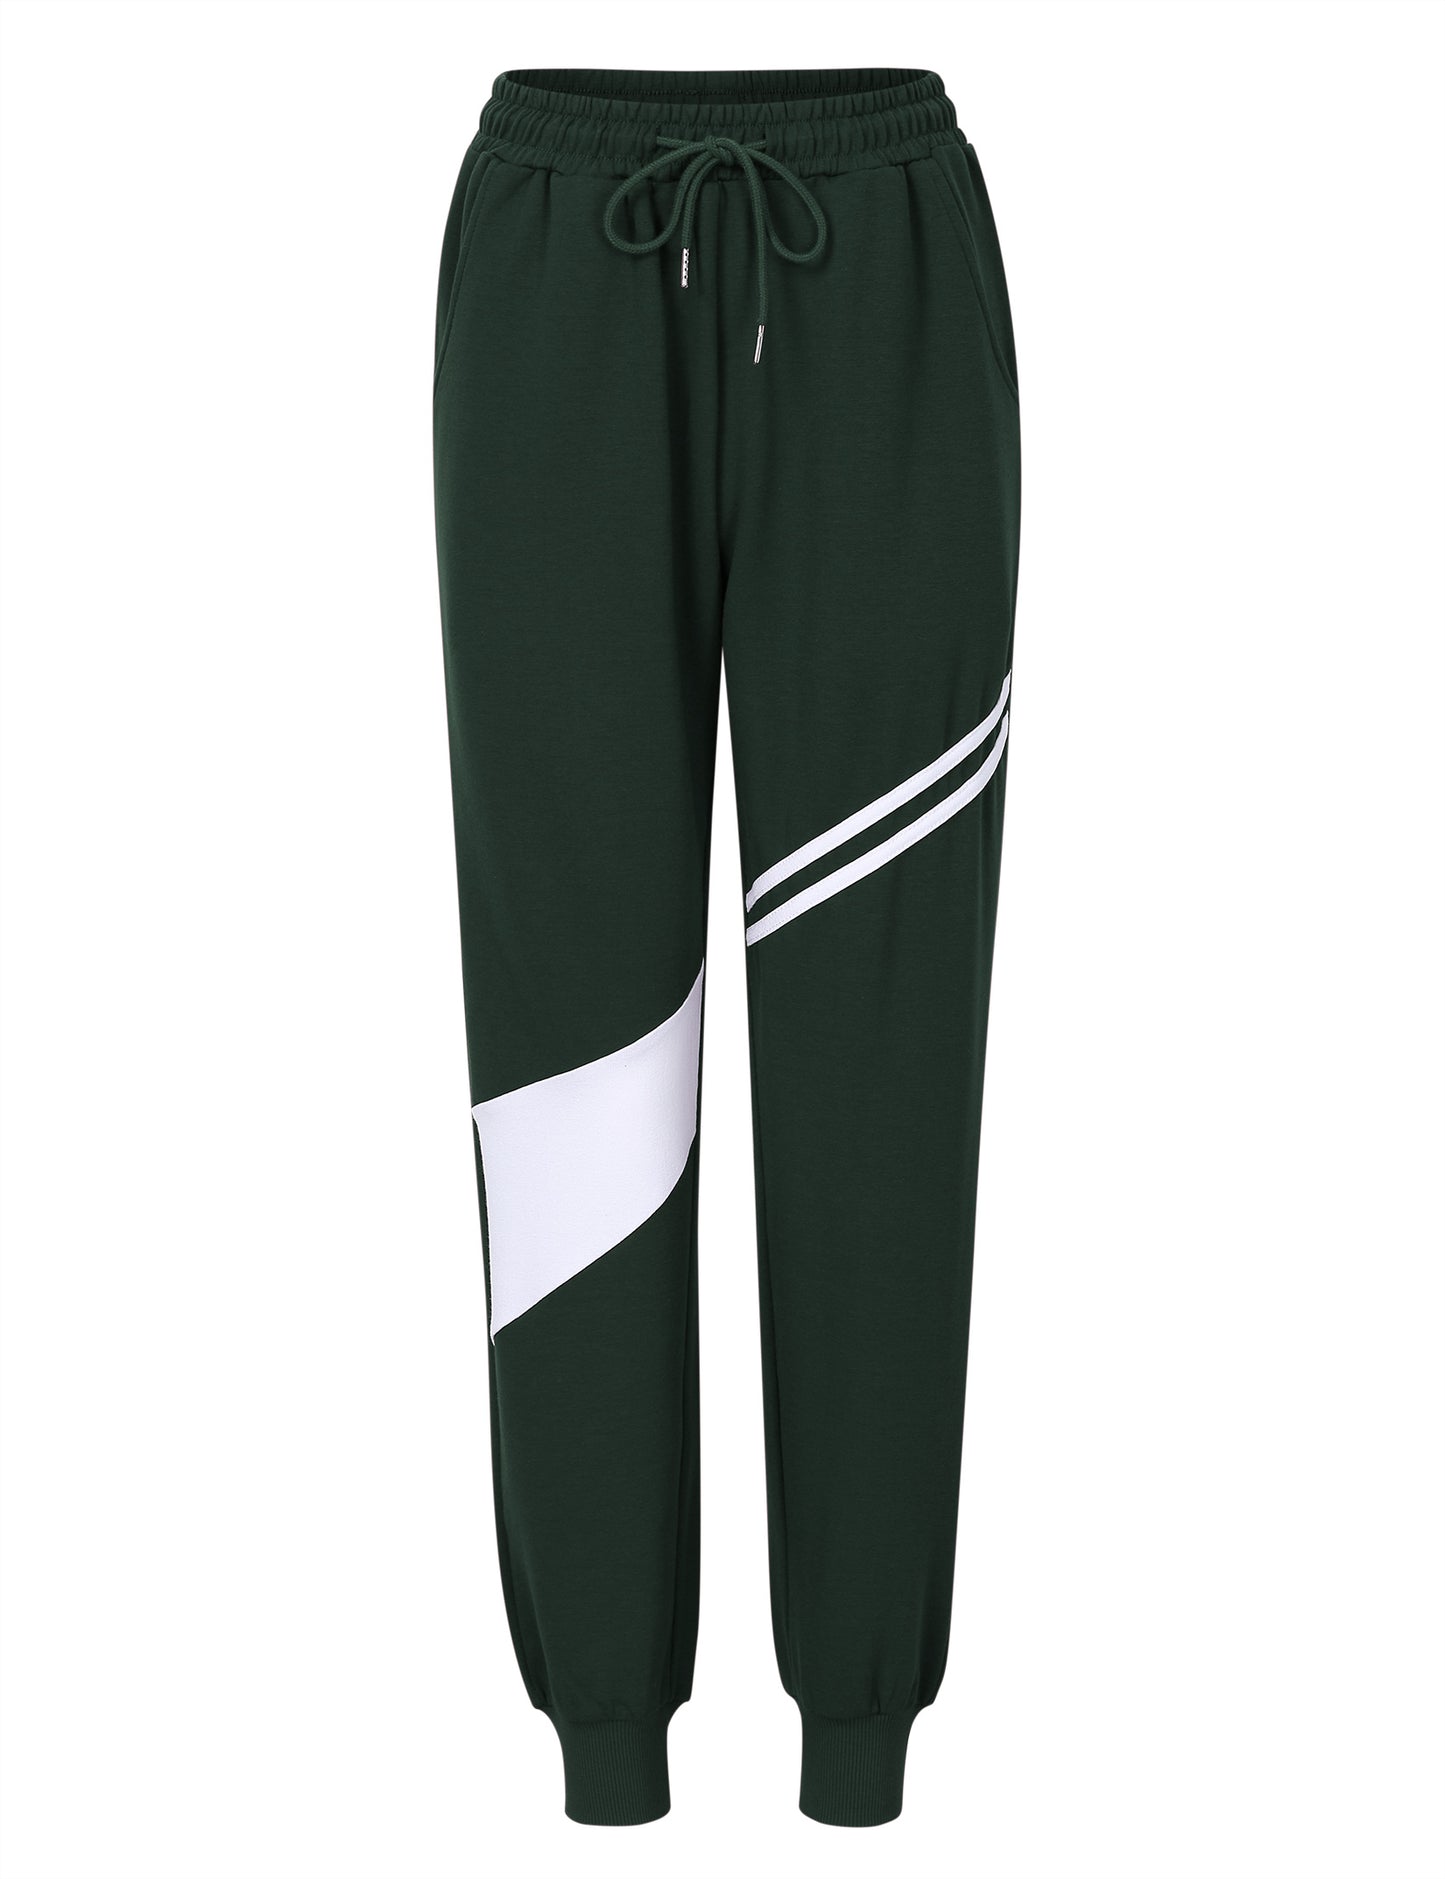 YESFASHION Women's Drawing Pockets Casual Sports Pants Green